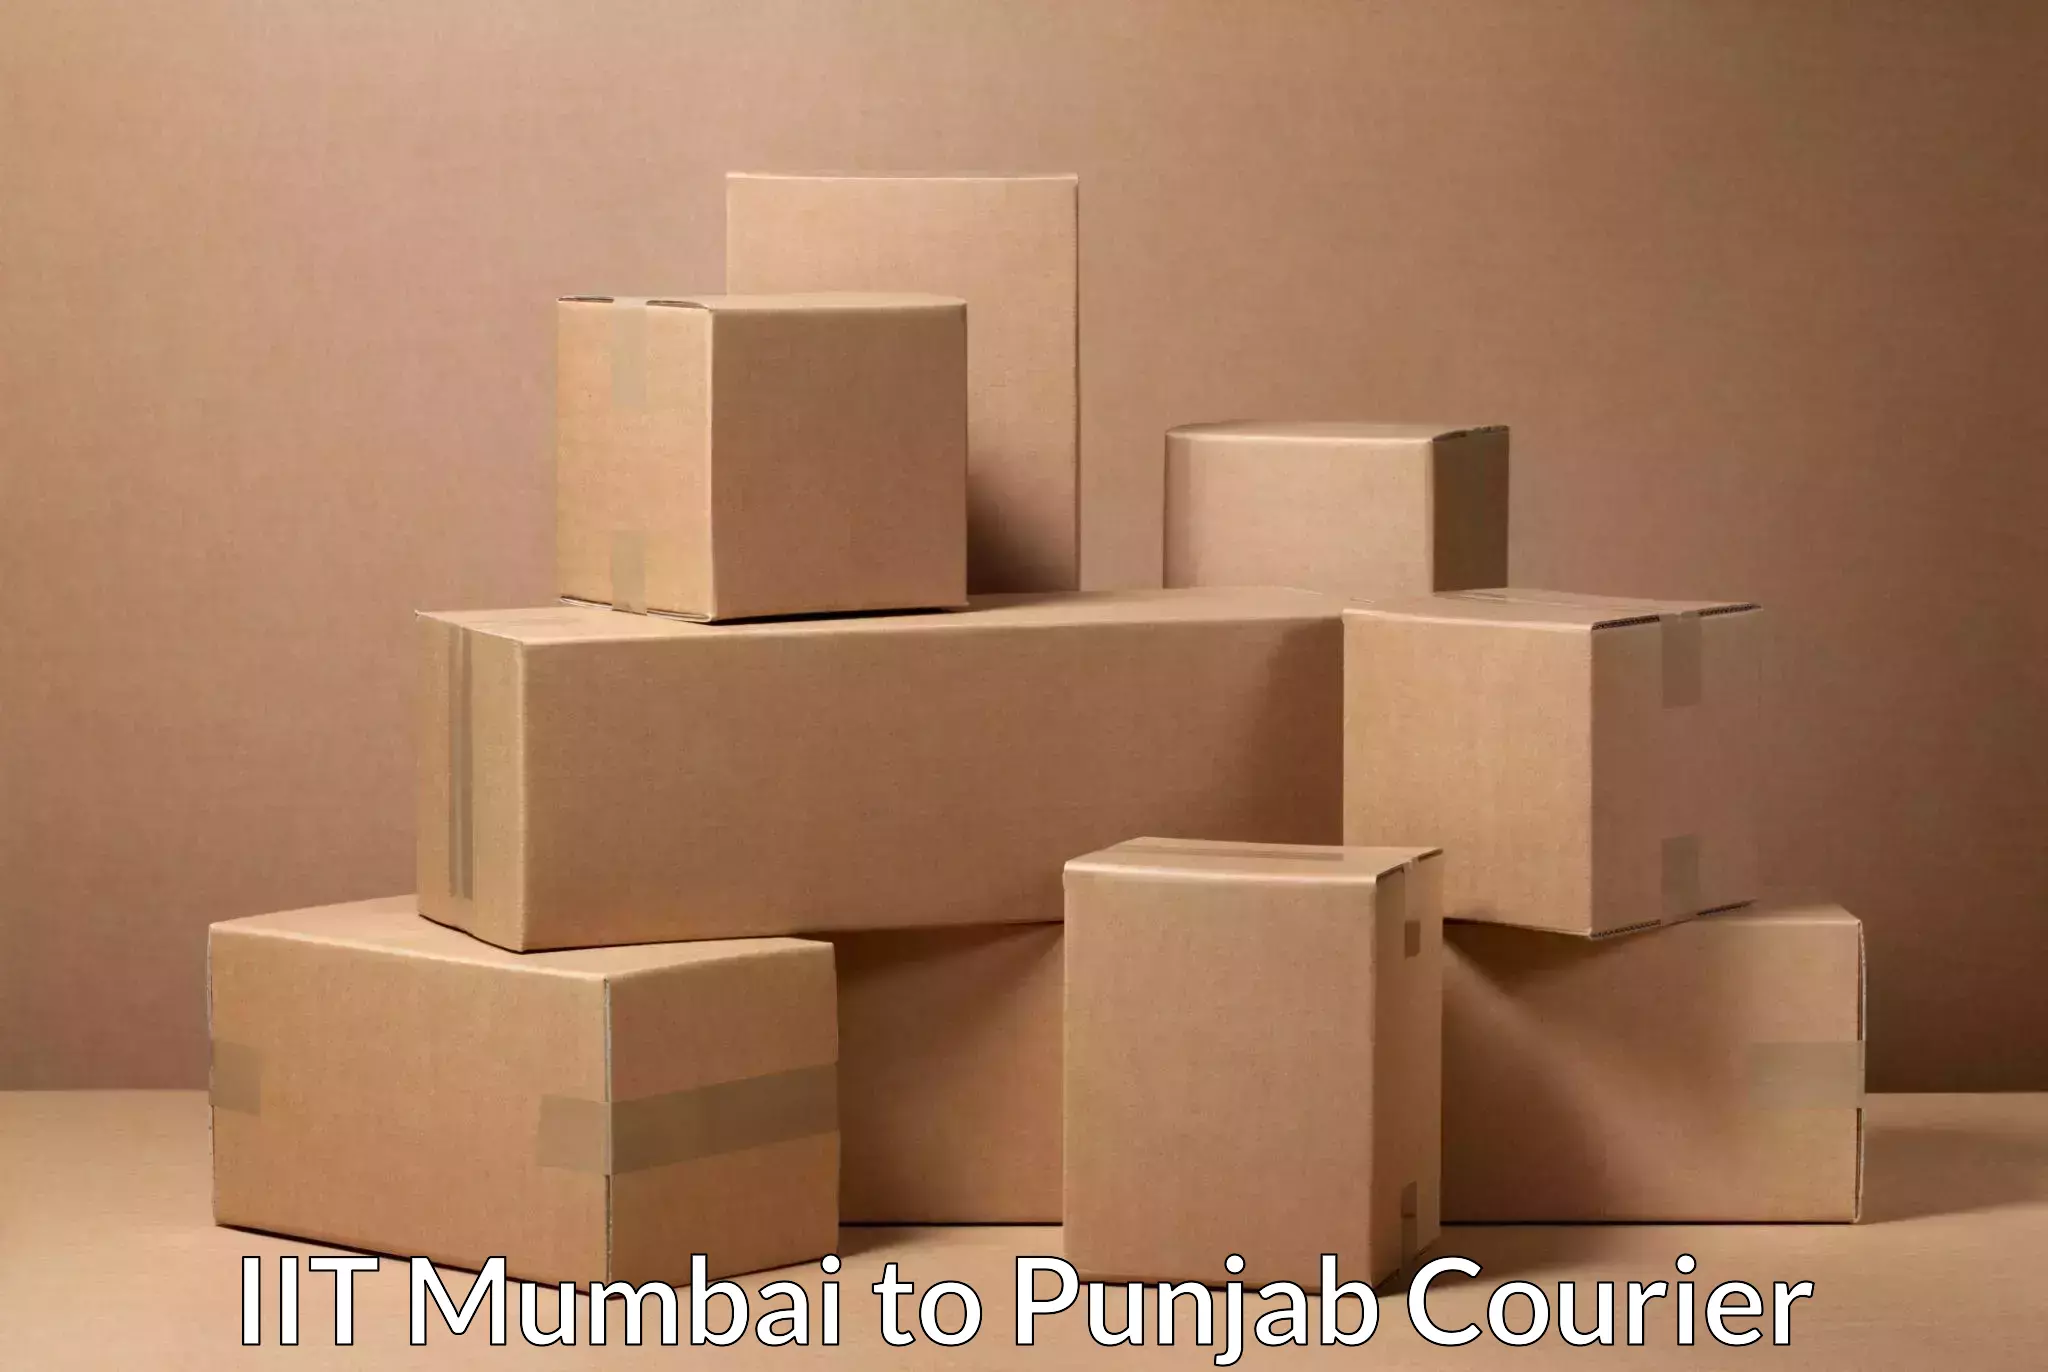 Global freight services IIT Mumbai to Punjab